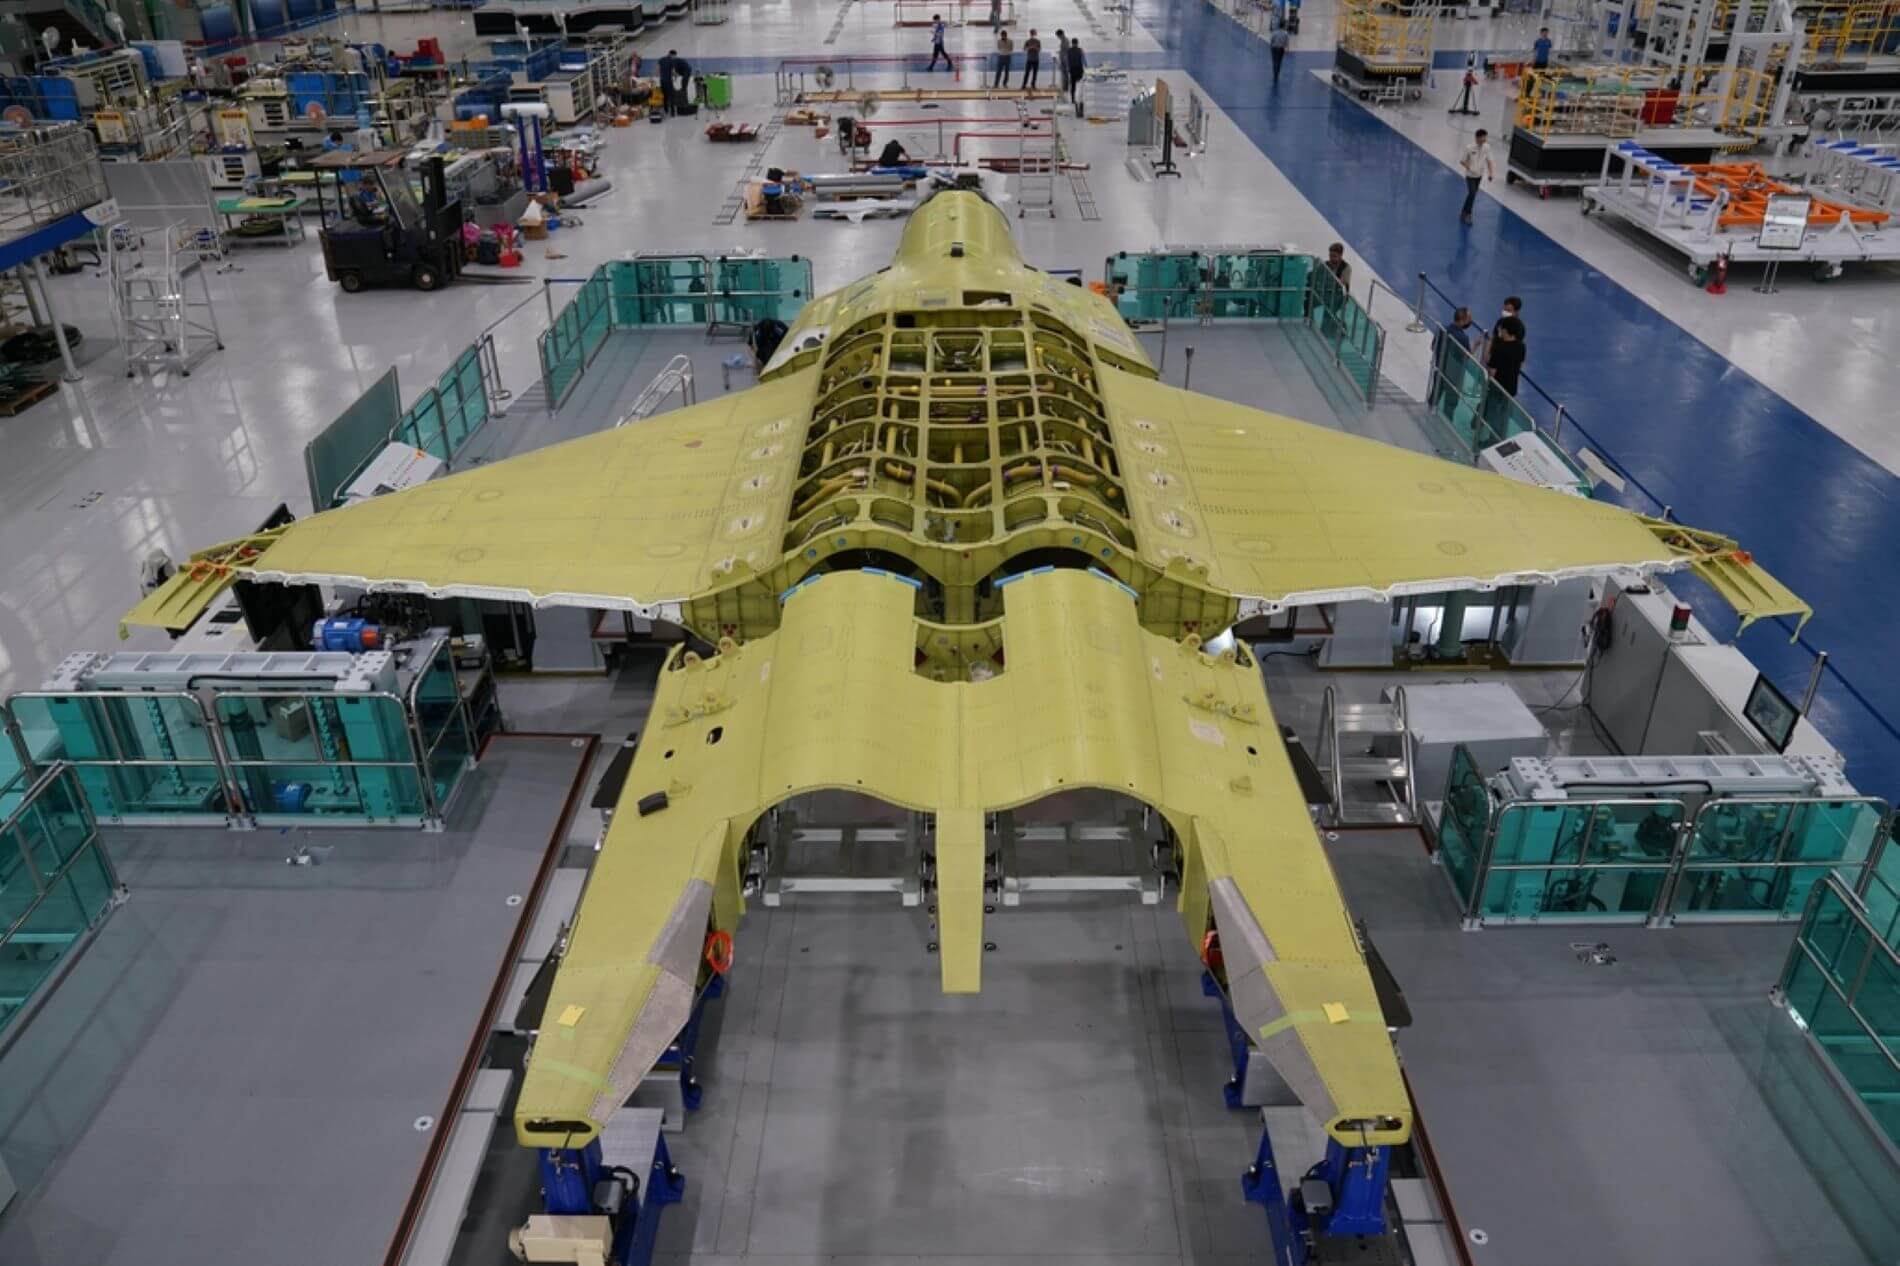 KF-X prototype under construction AeroTime news